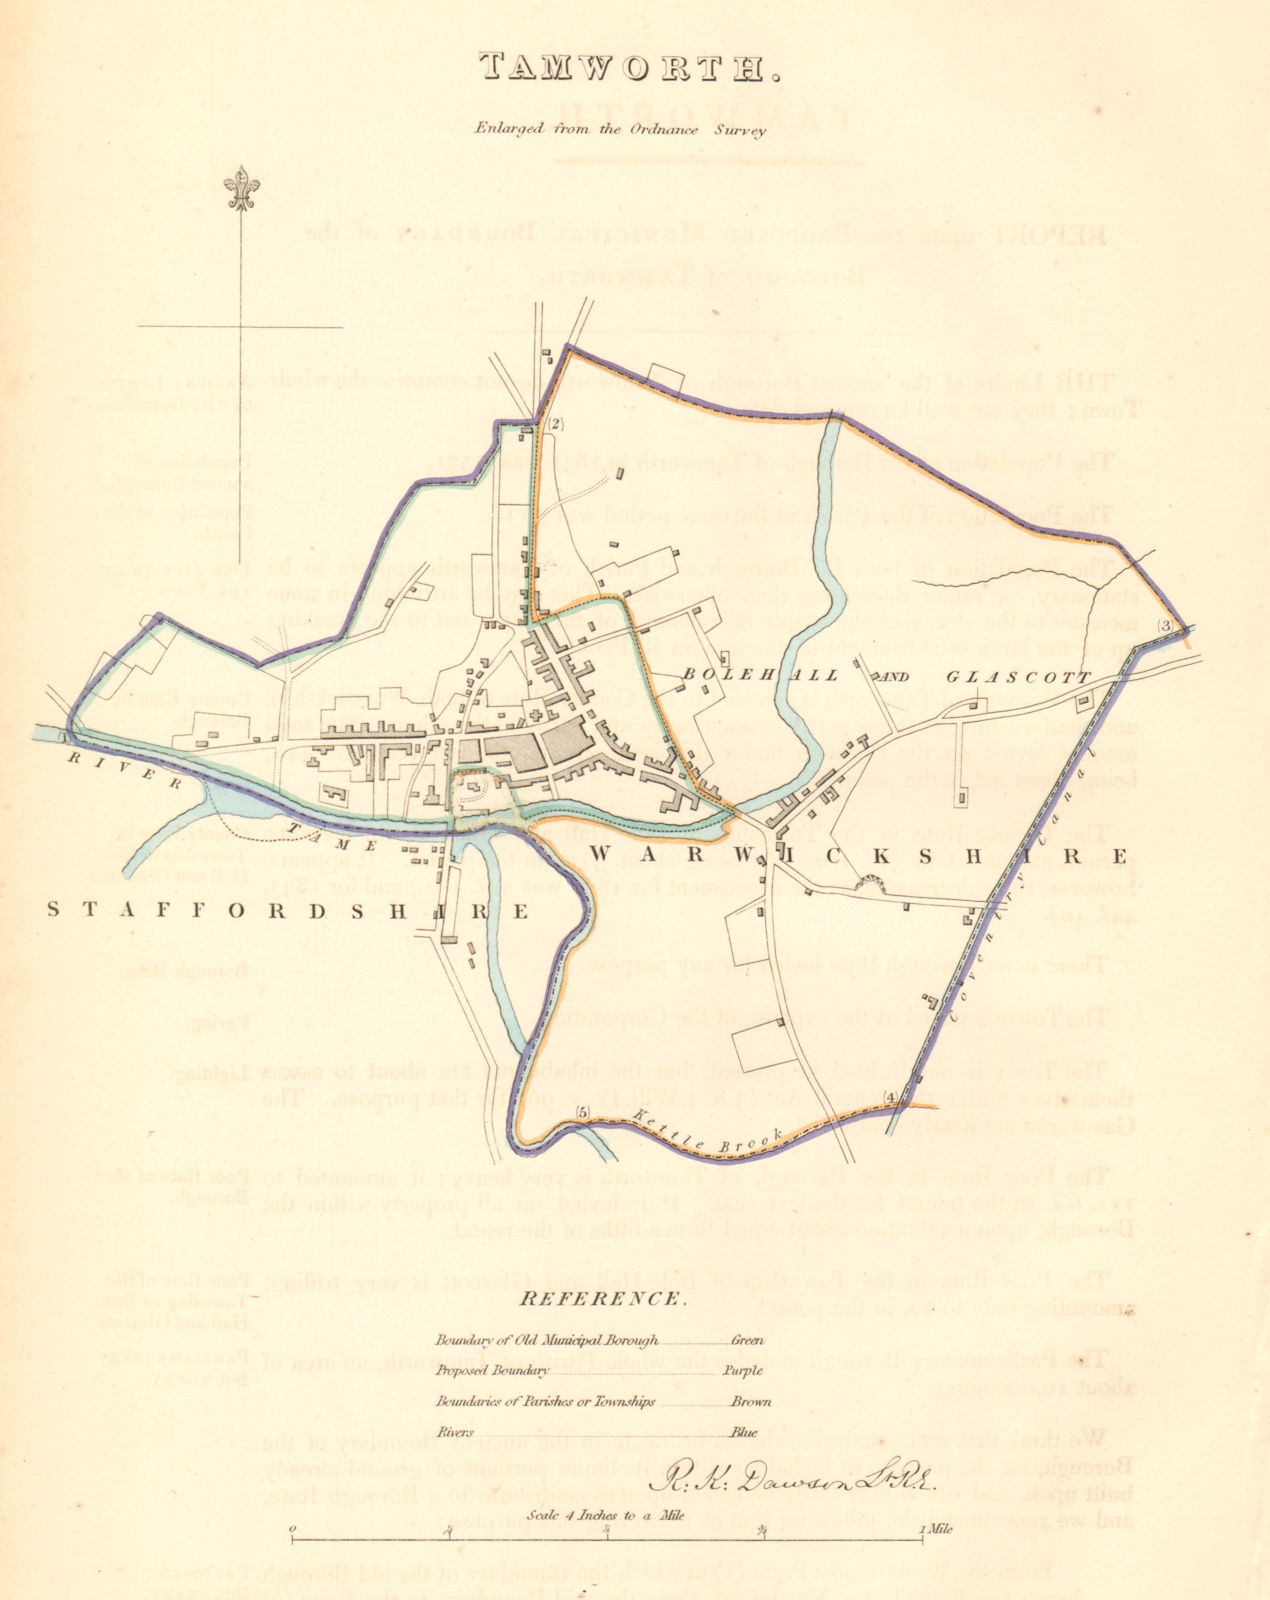 TAMWORTH borough/town plan. BOUNDARY COMMISSION. Staffordshire. DAWSON 1837 map